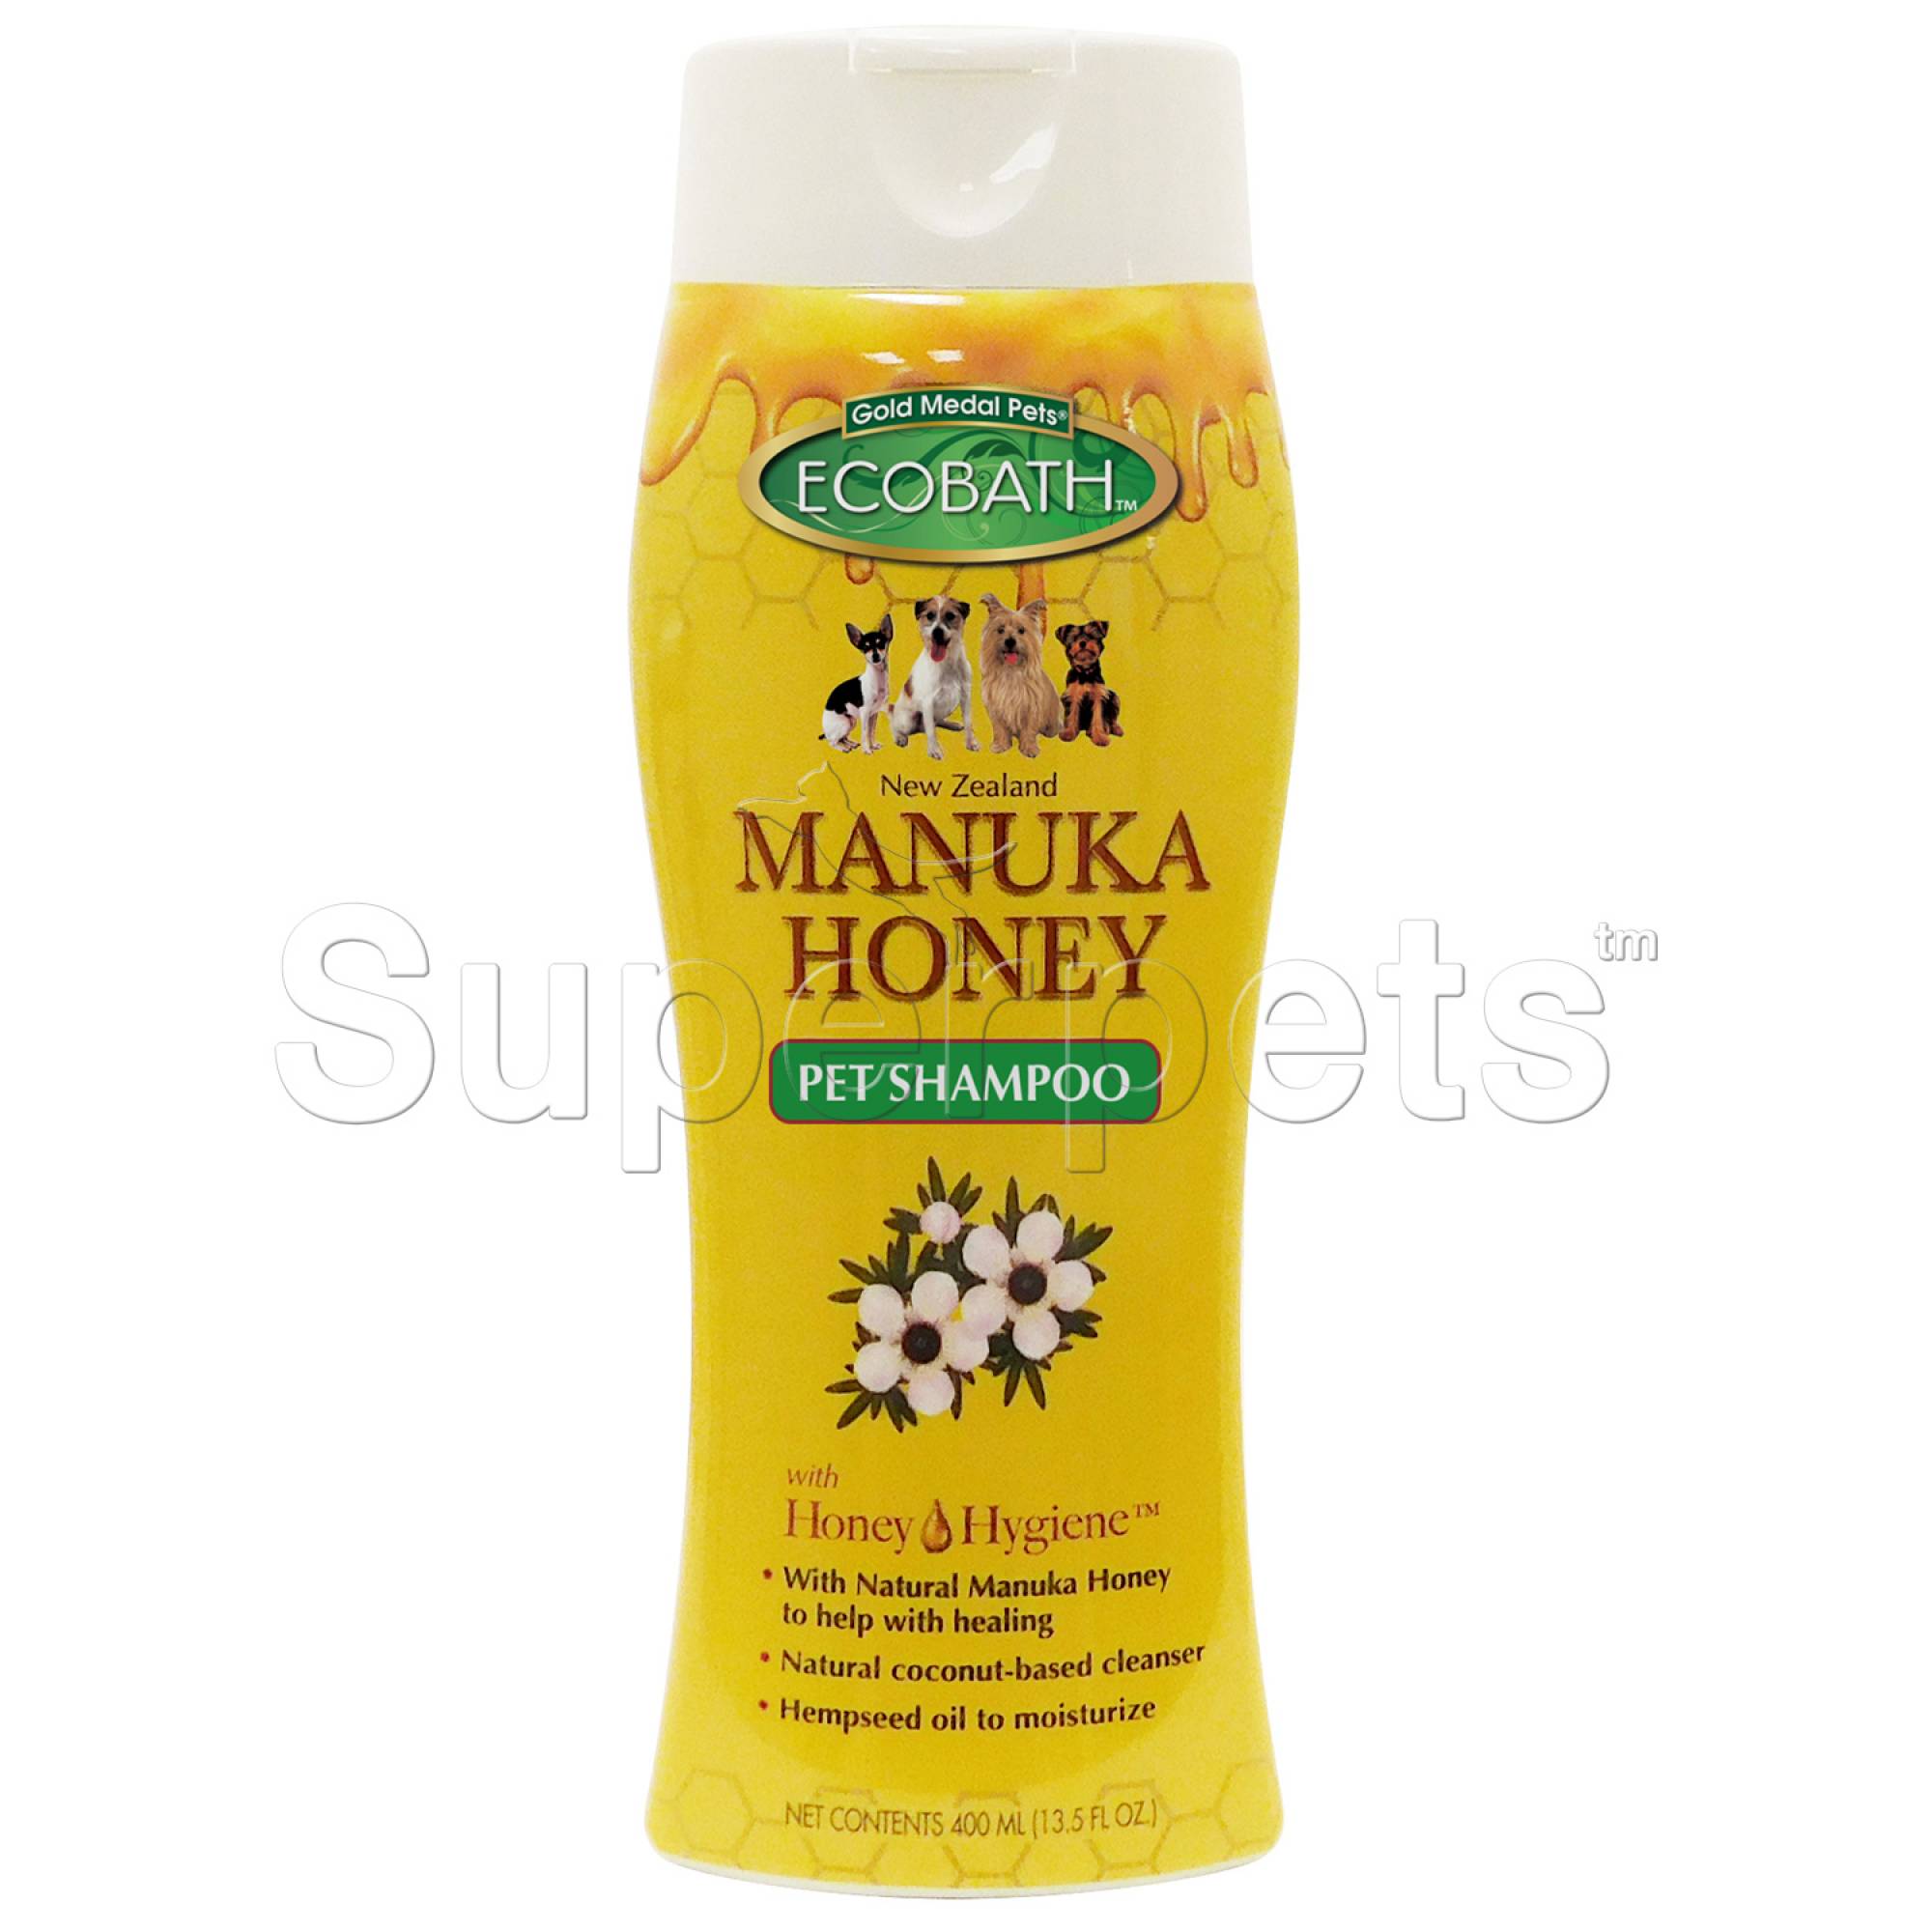 Gold Medal Pets - EcoBath Manuka Honey Pet Shampoo 400ml (13.5oz)